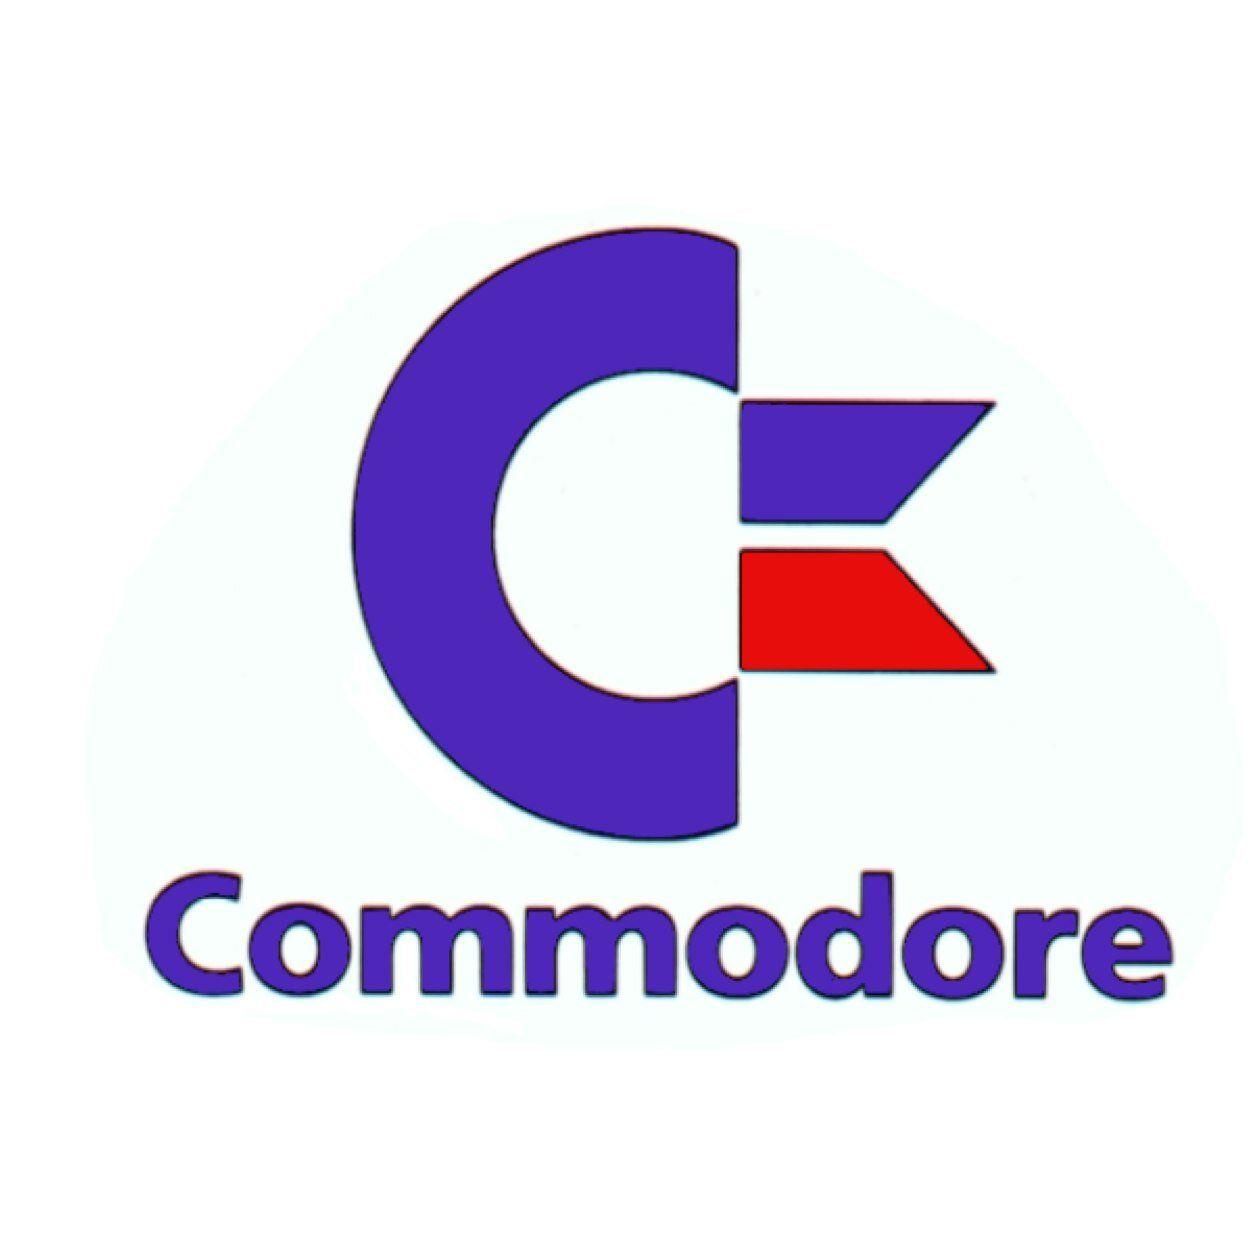 Commodore Logo - Commodore Logo. | Commodore 64 | Desktop computers, Logos og ...